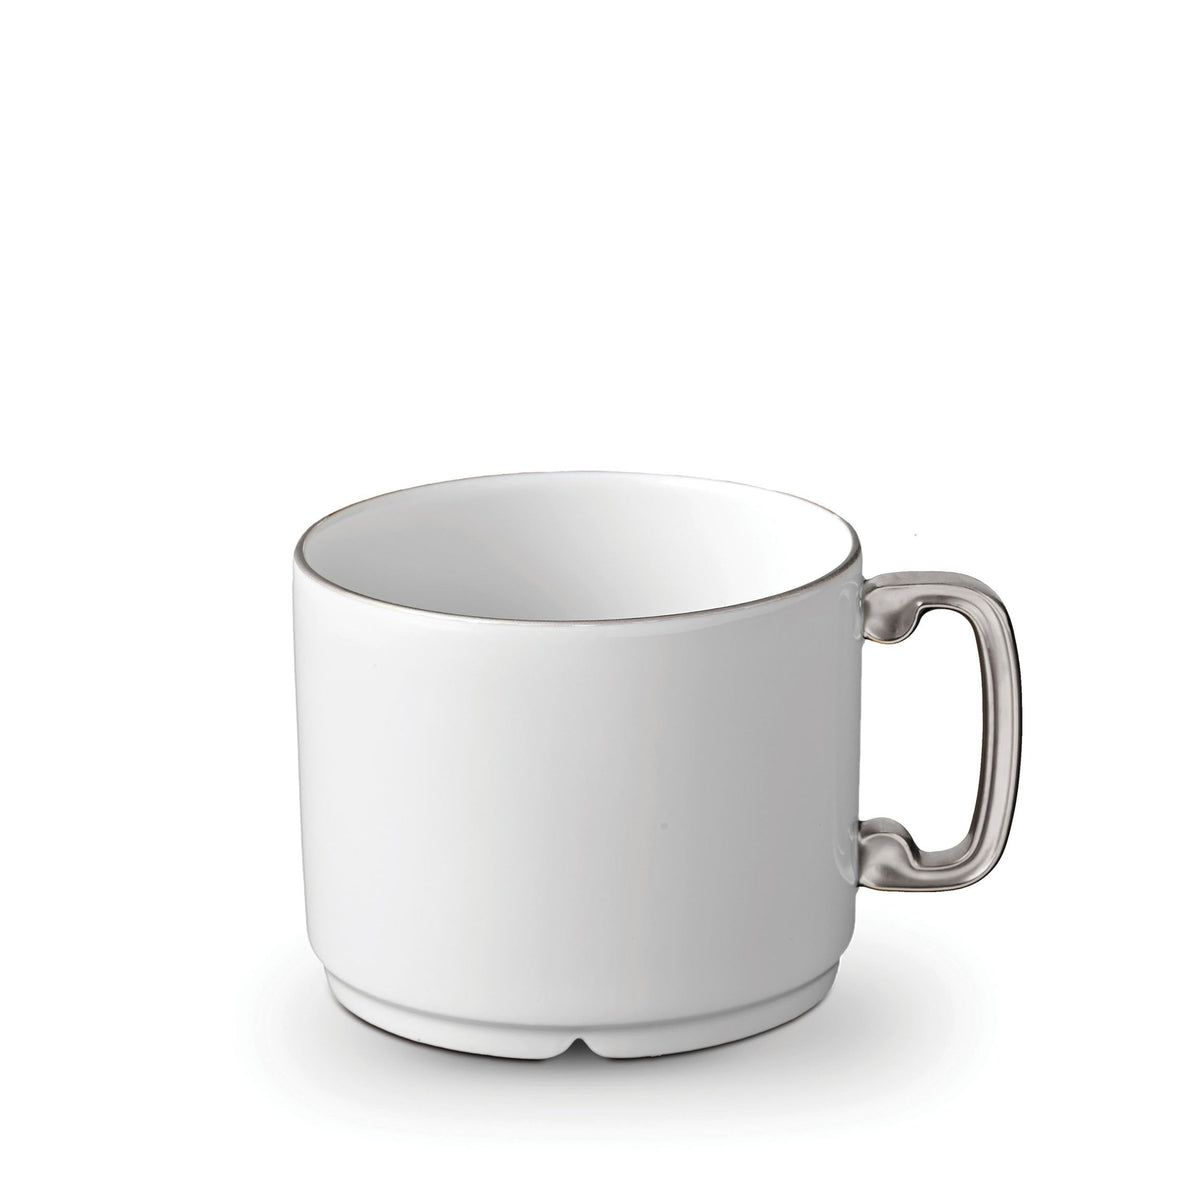 Han Tea Cup - Platinum